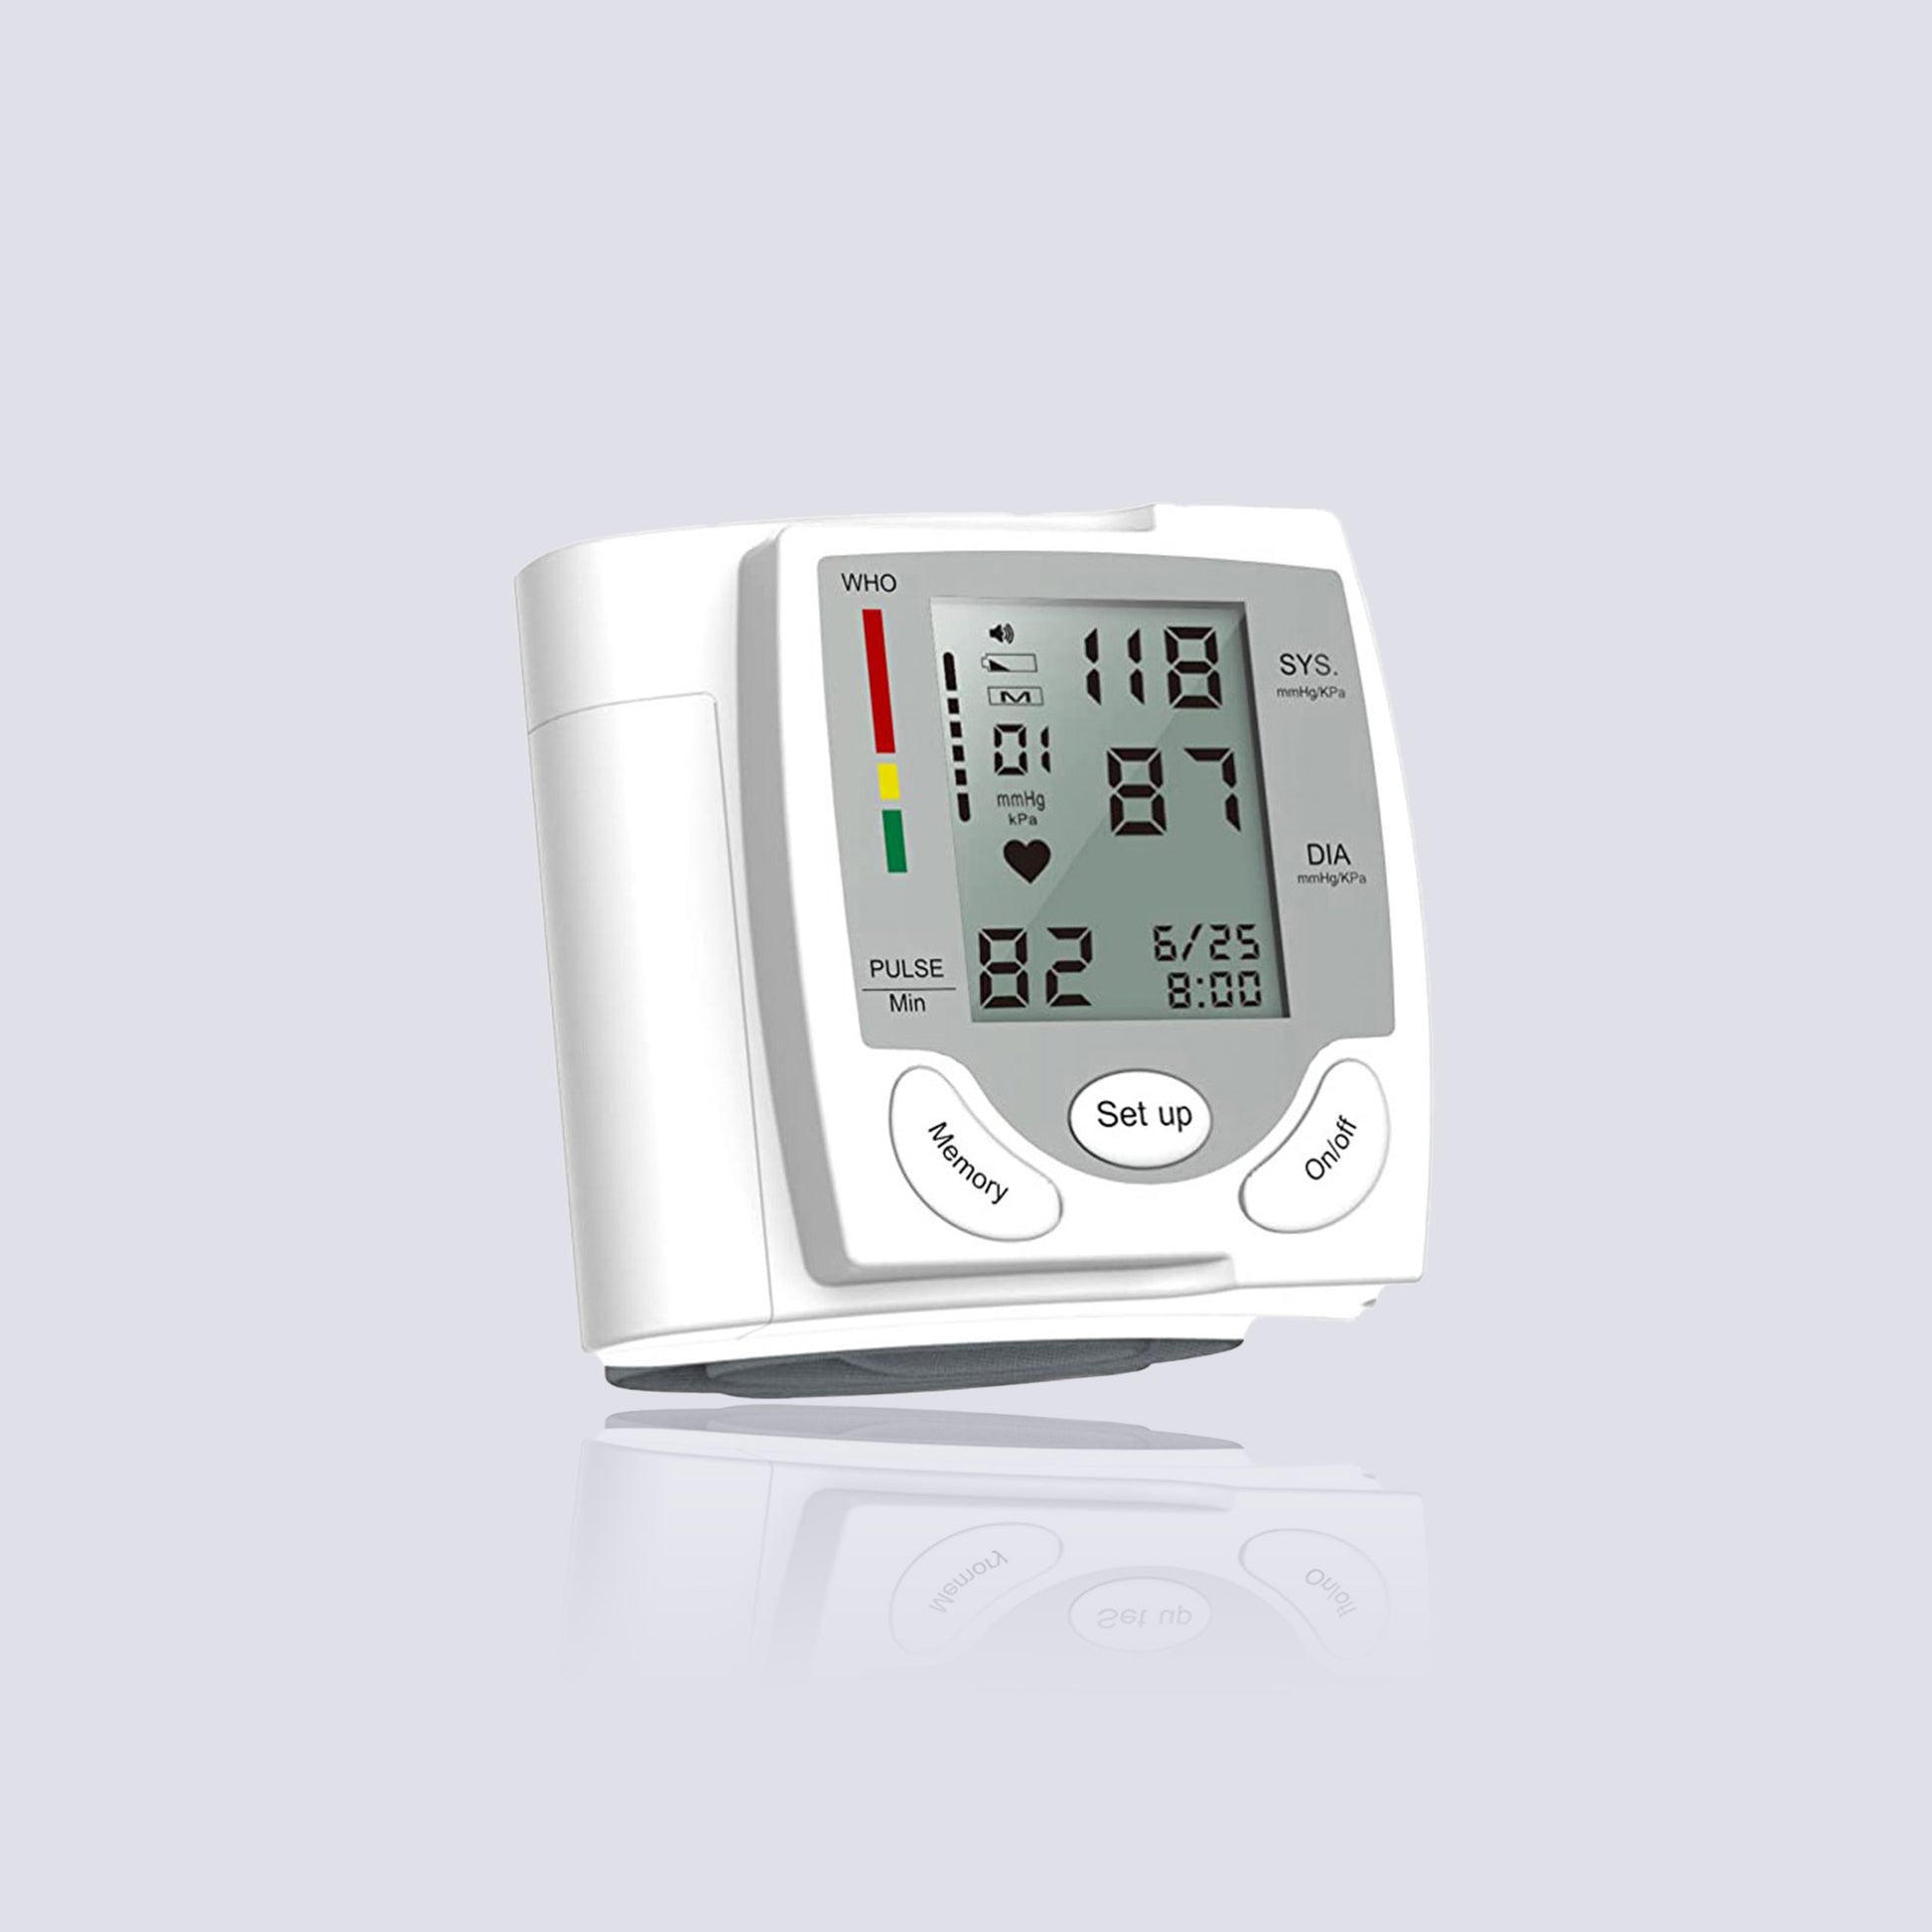 Wrist Blood Pressure Monitor - 1/each